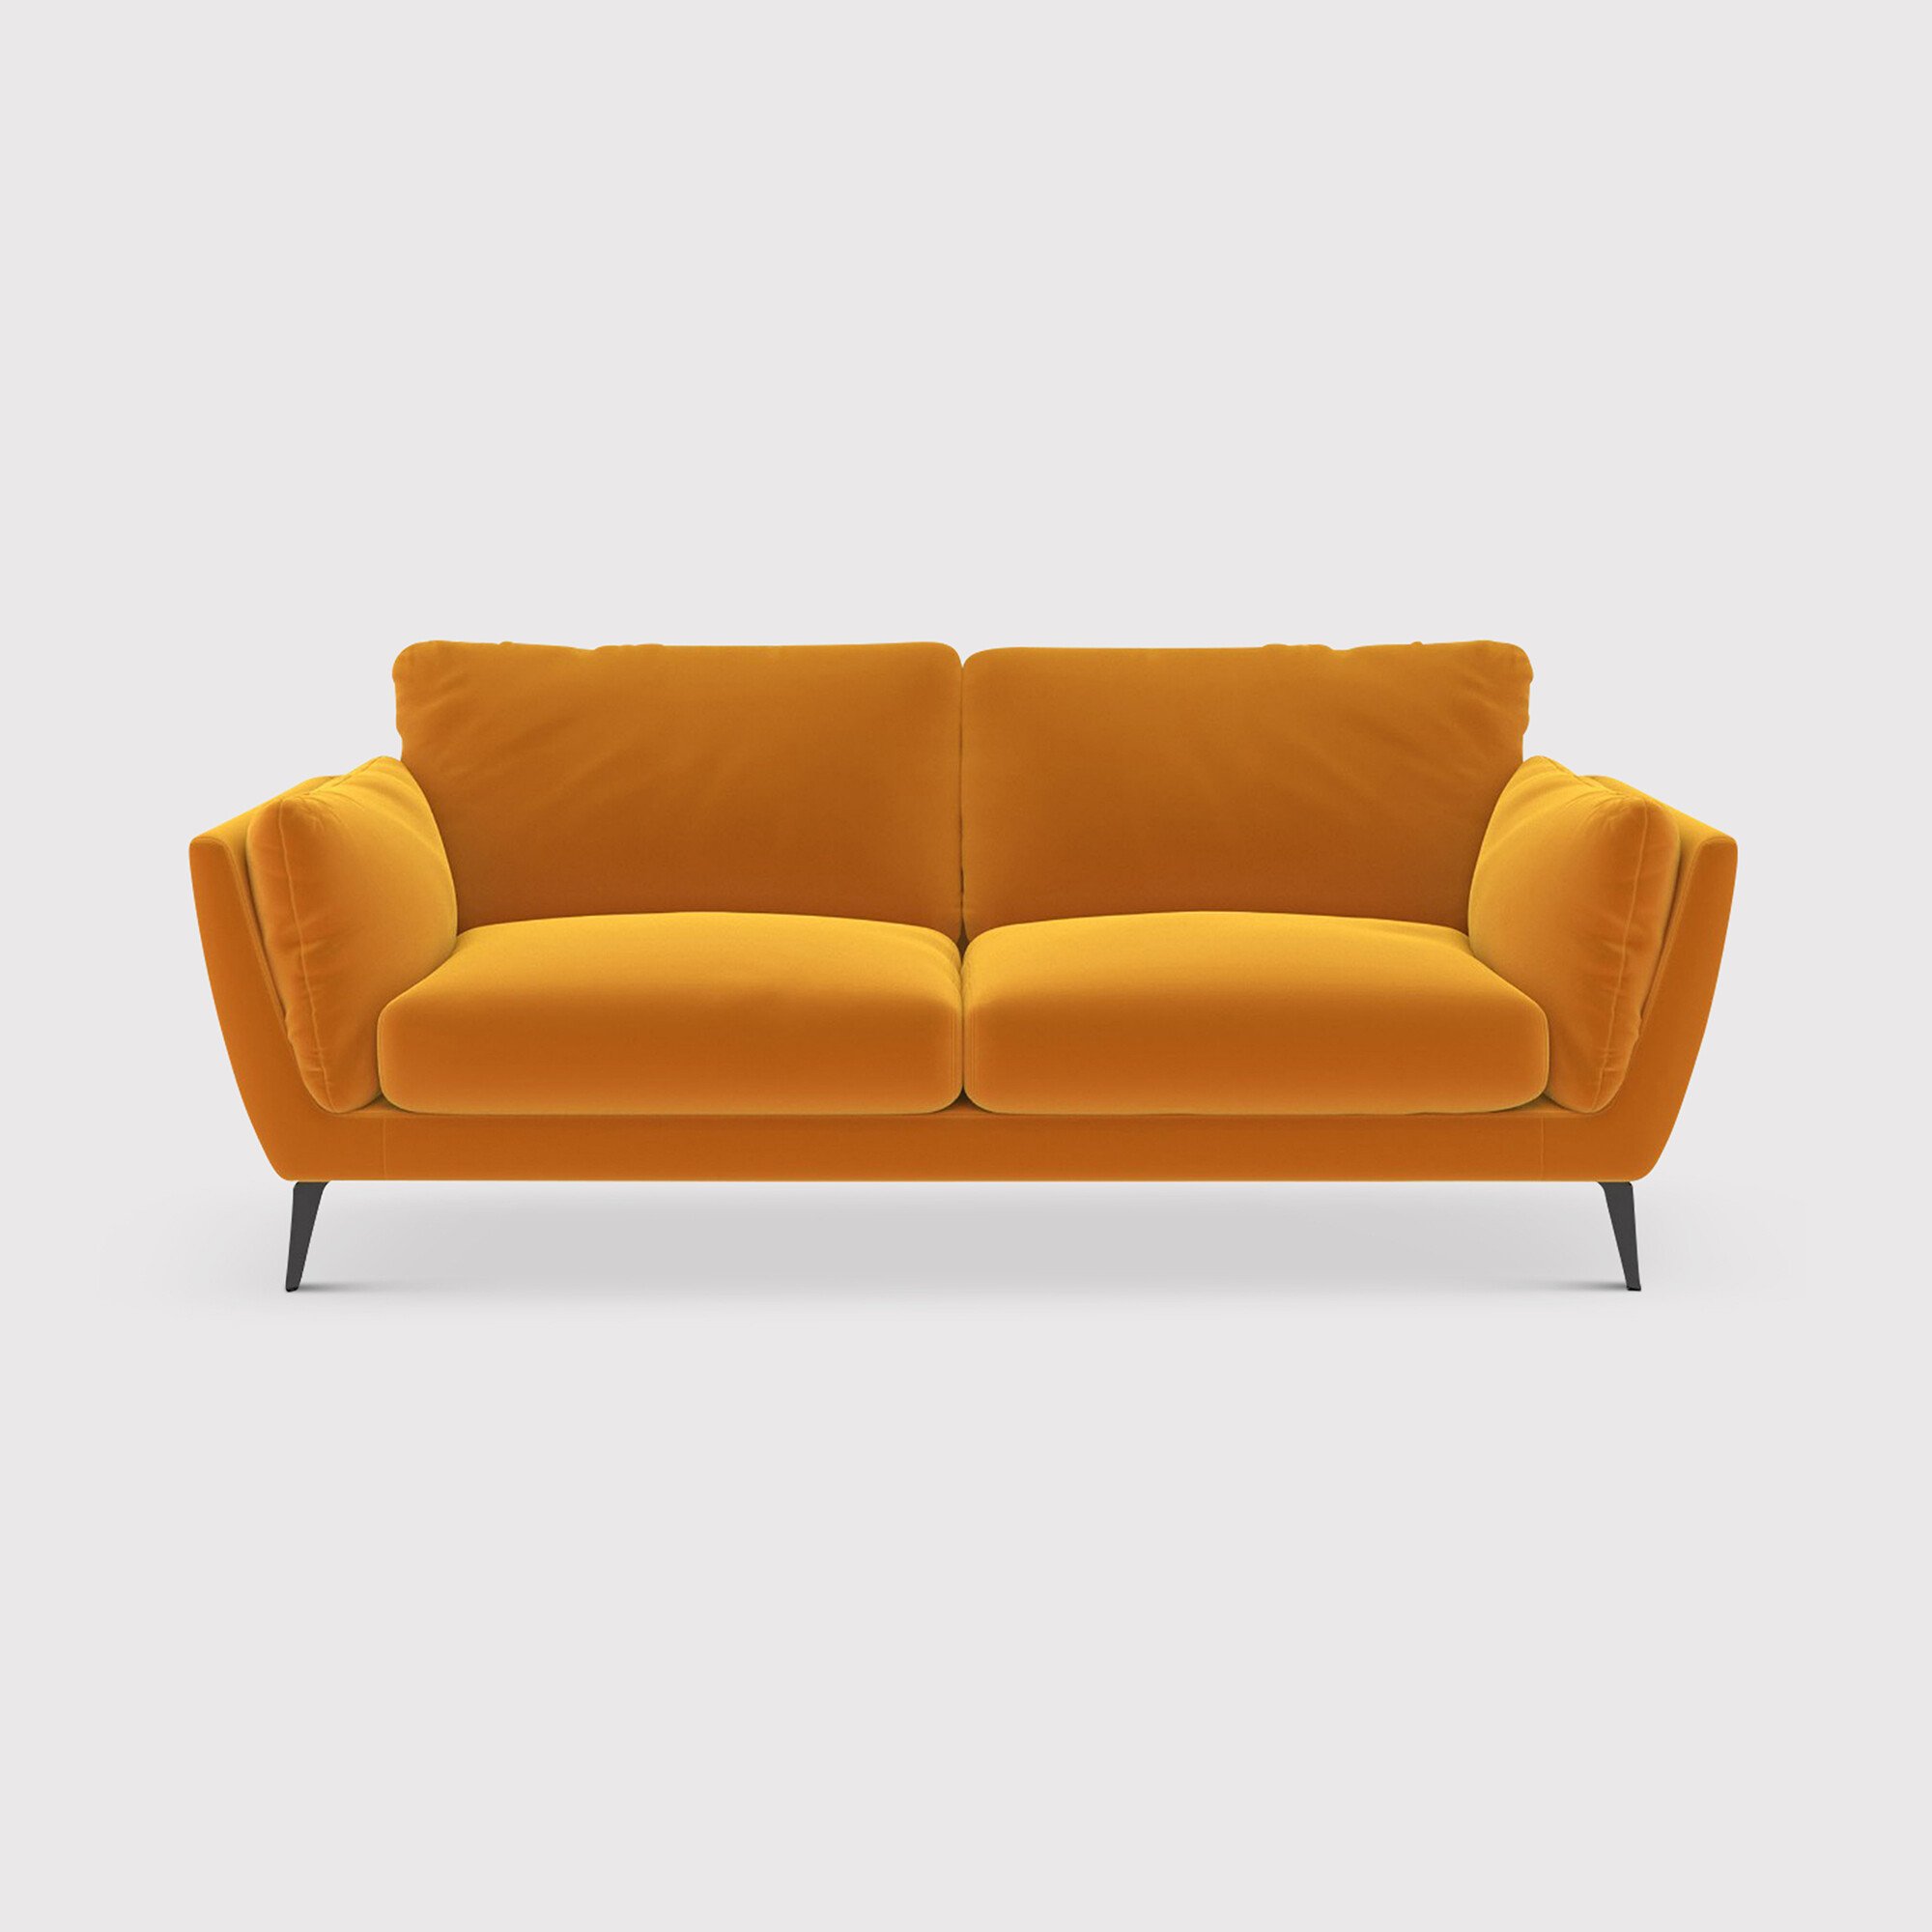 Boone 3 Seater Sofa, Yellow Fabric | Barker & Stonehouse